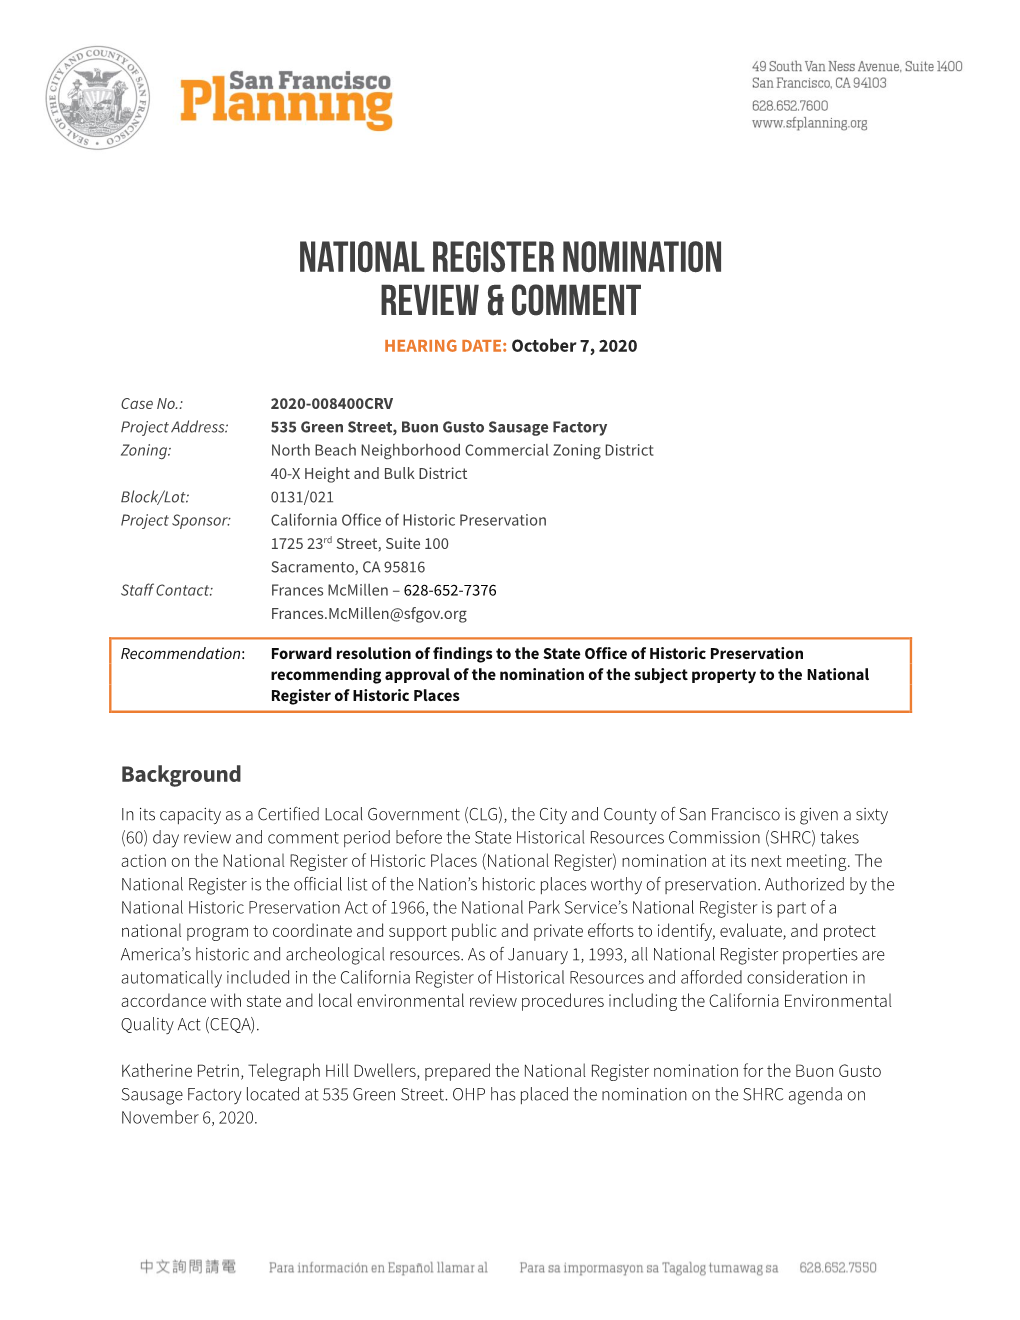 National Register Nomination Review & Comment